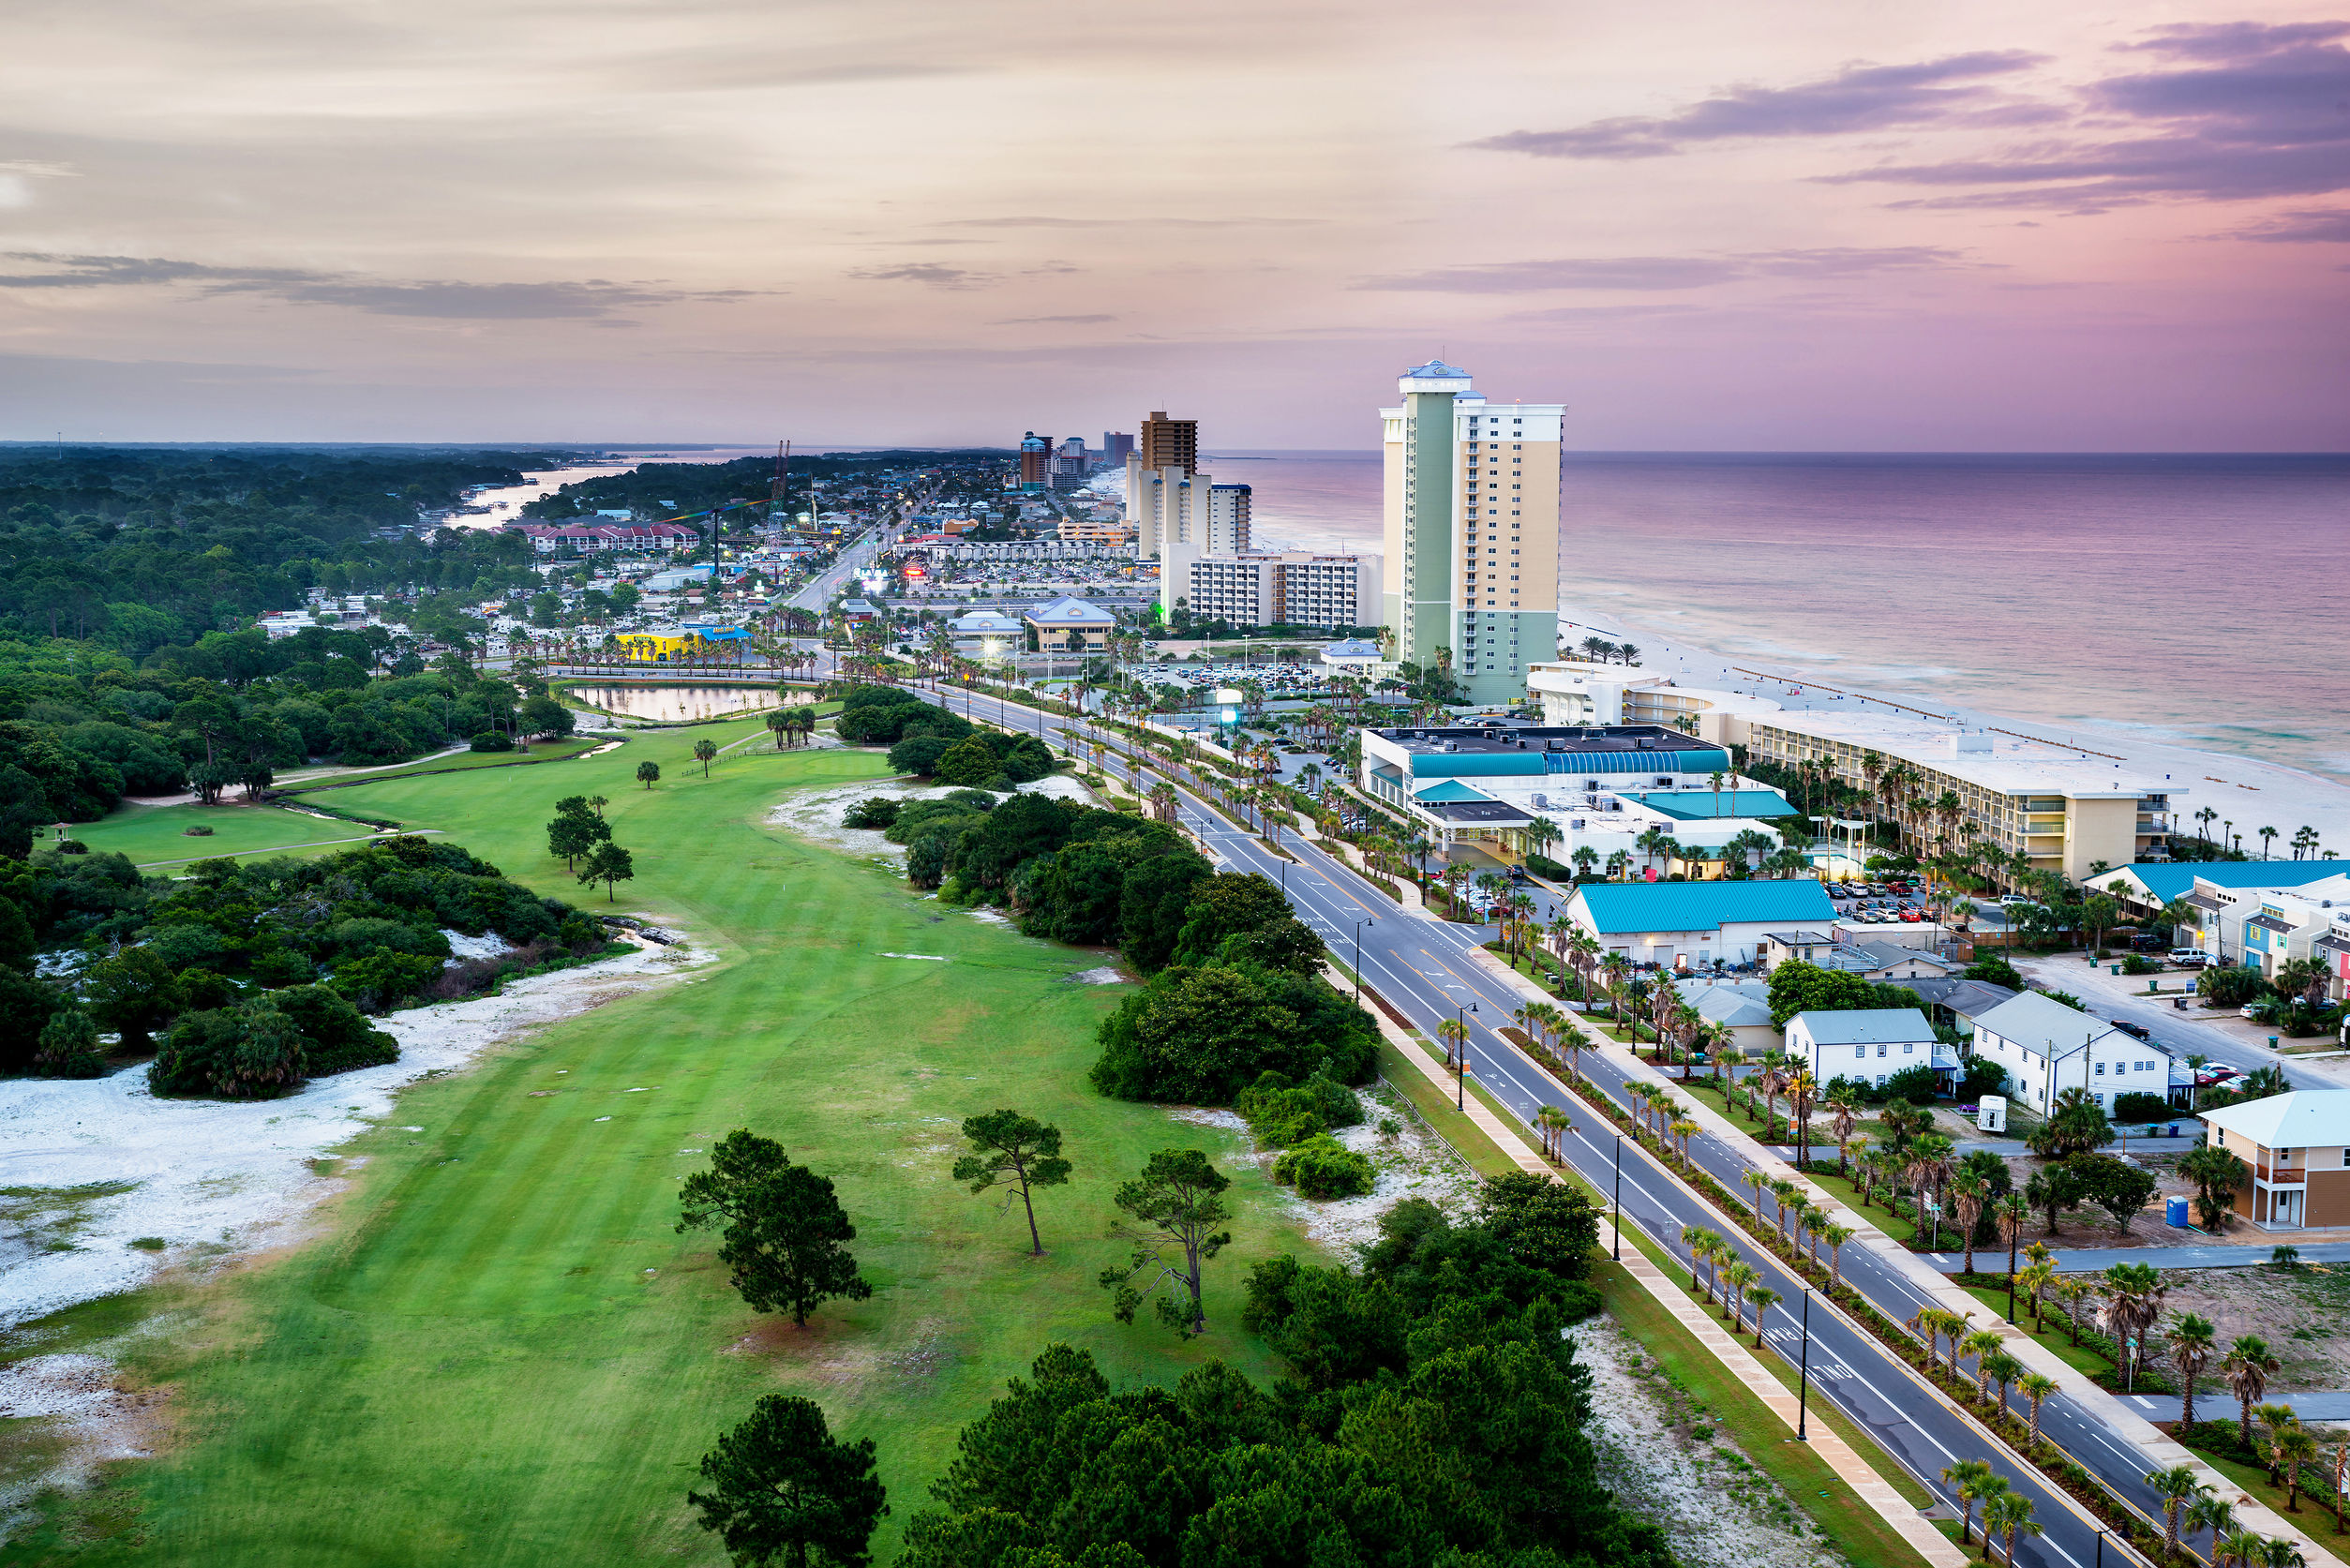 Emerald Coast Flórida: Panamá City, Scenic Highway 30A e Destin